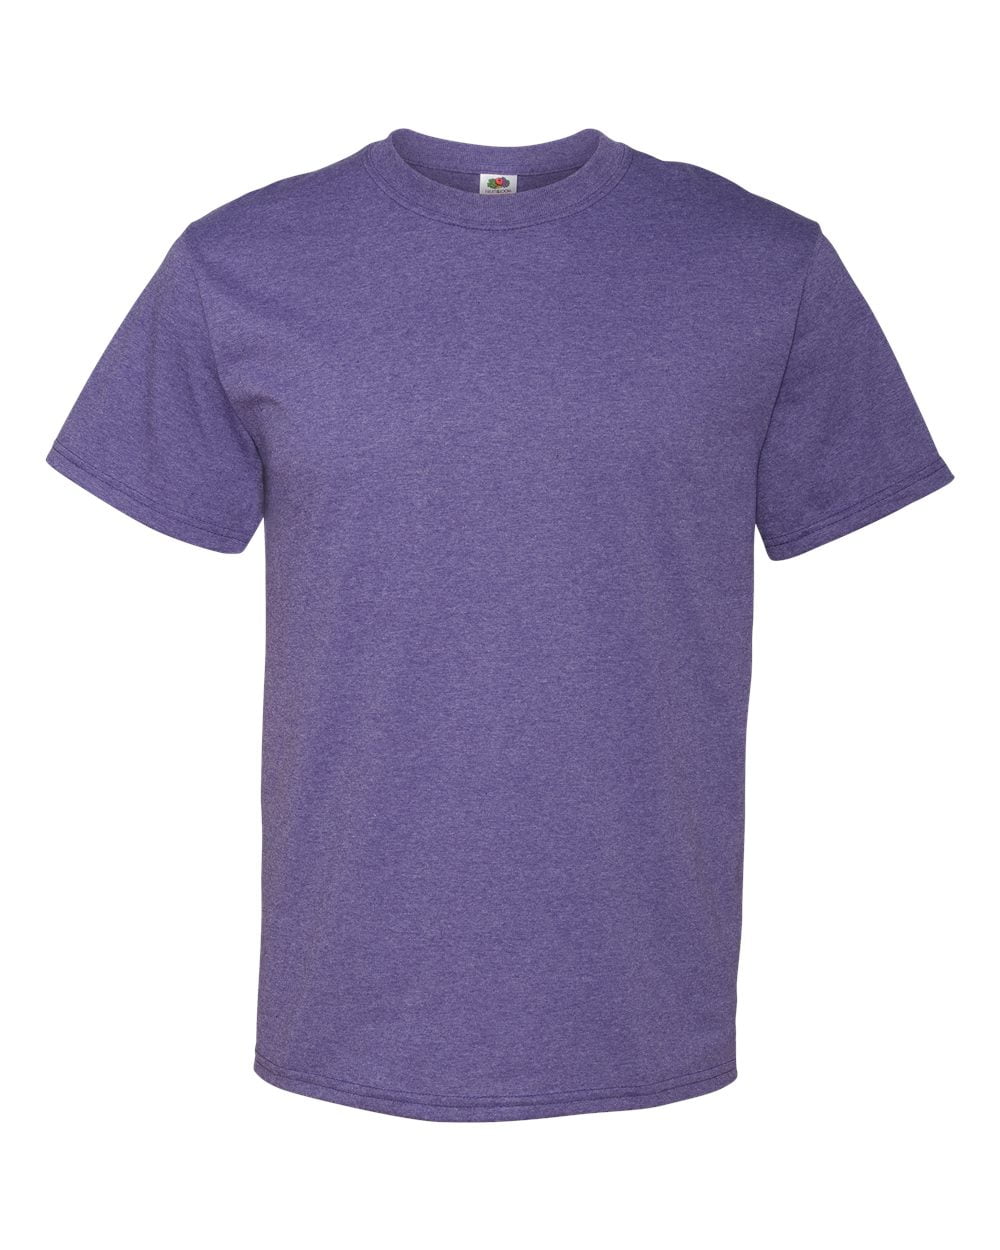 Anvil Brand Cap Sleeve T-Shirt Vintage Item 50/50 Soft Rib Knit fabric Style 541 